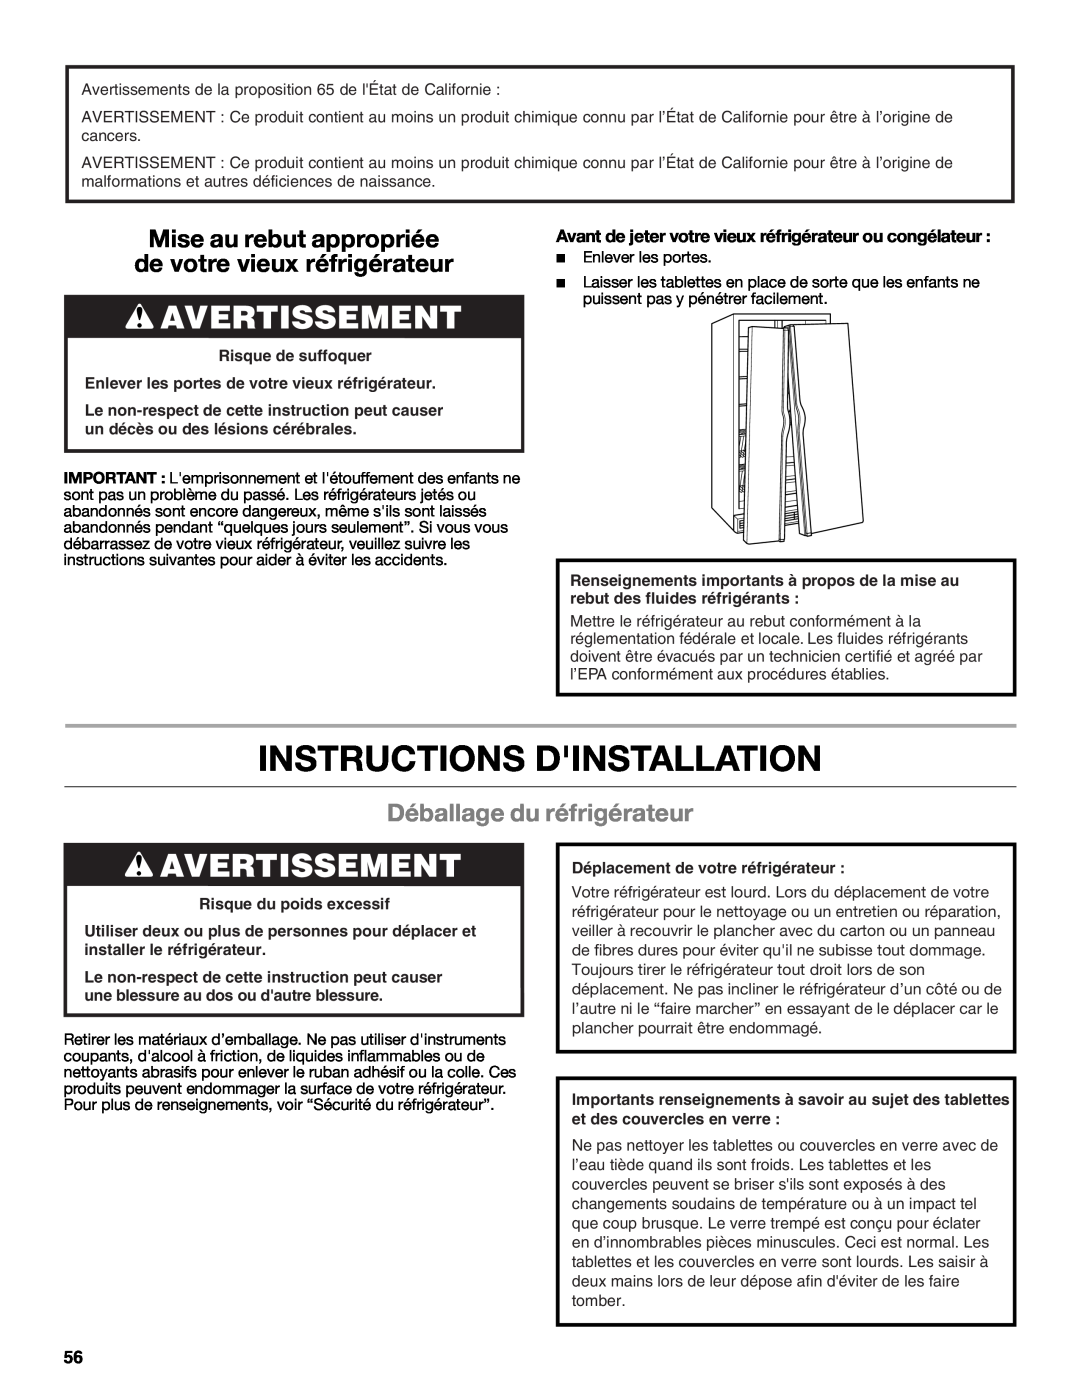 Whirlpool W10632883A Instructions Dinstallation, Avertissement, Déballage du réfrigérateur, Risque du poids excessif 